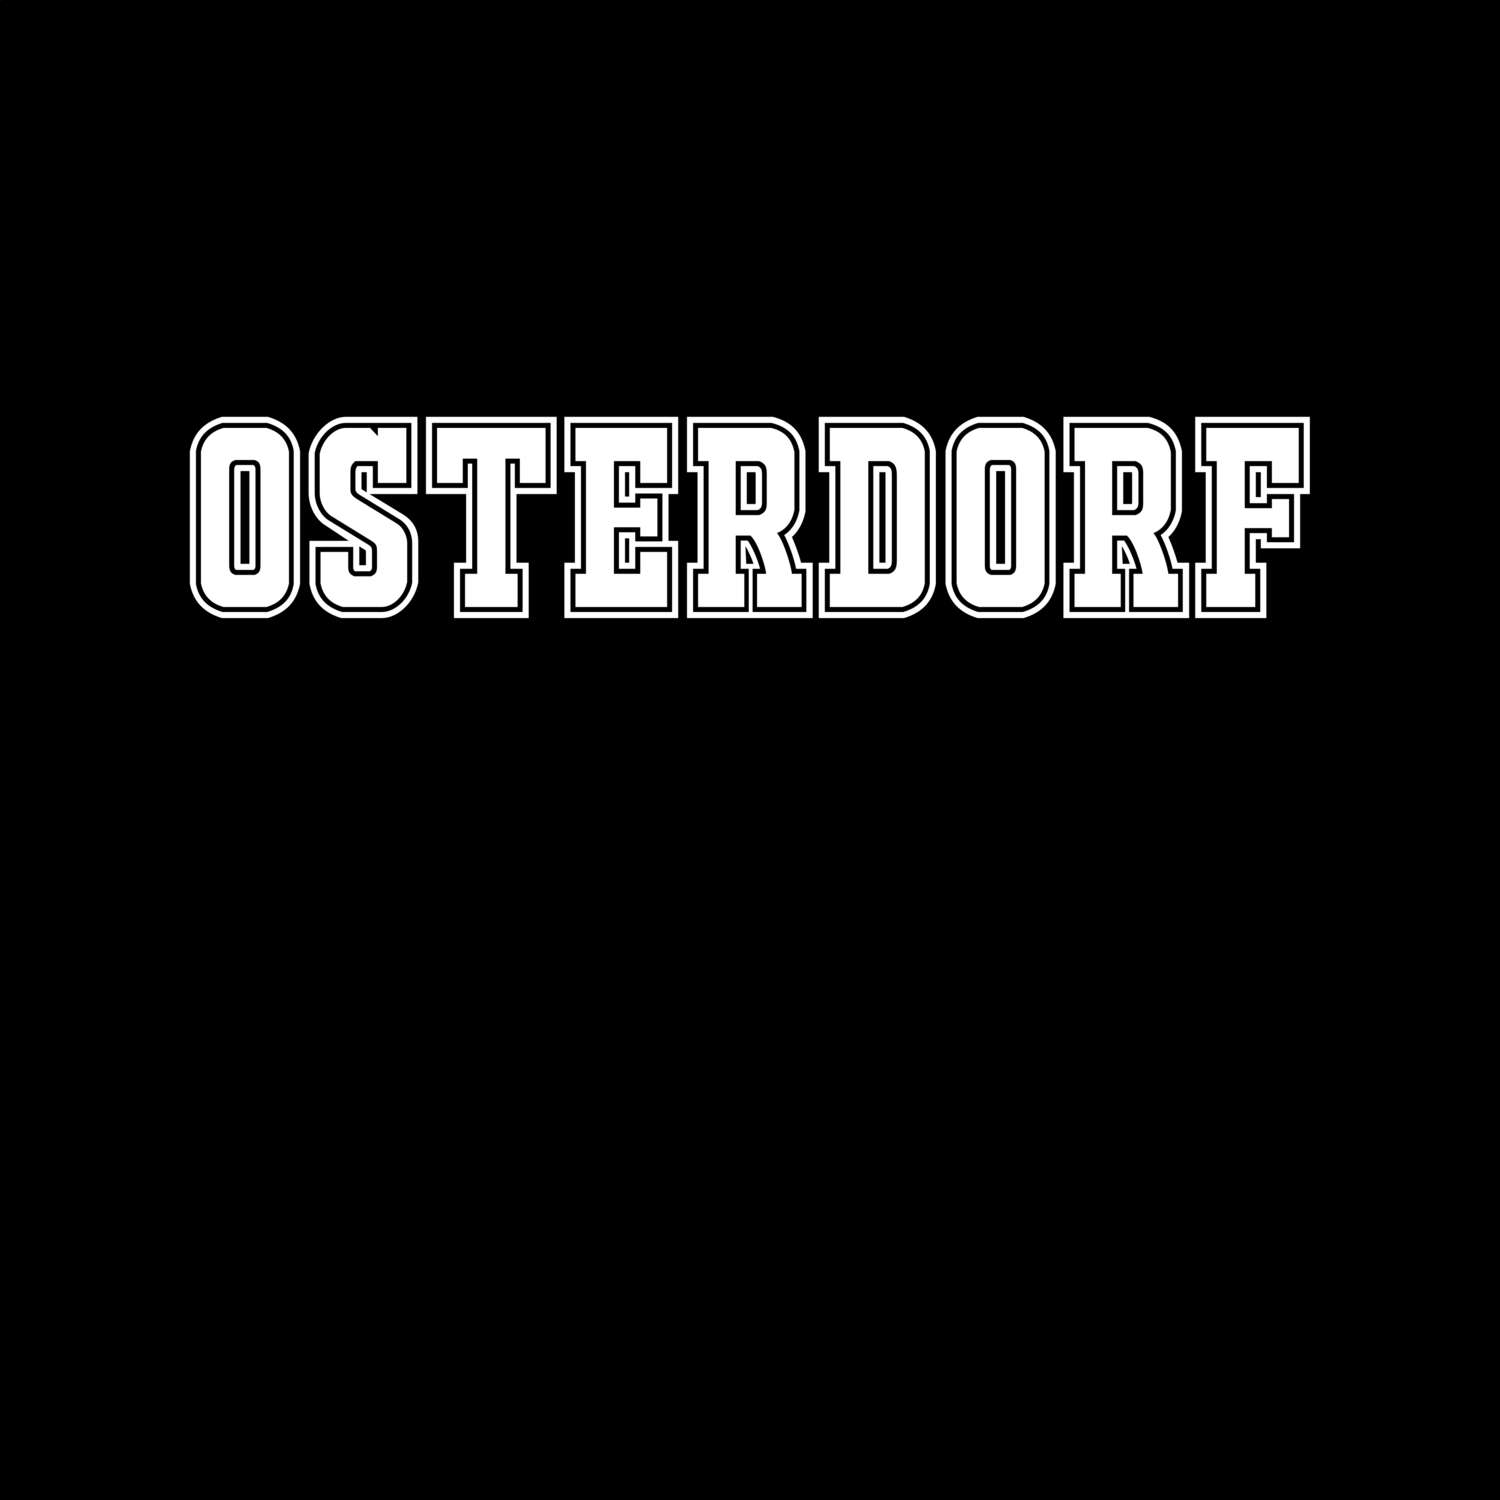 Osterdorf T-Shirt »Classic«